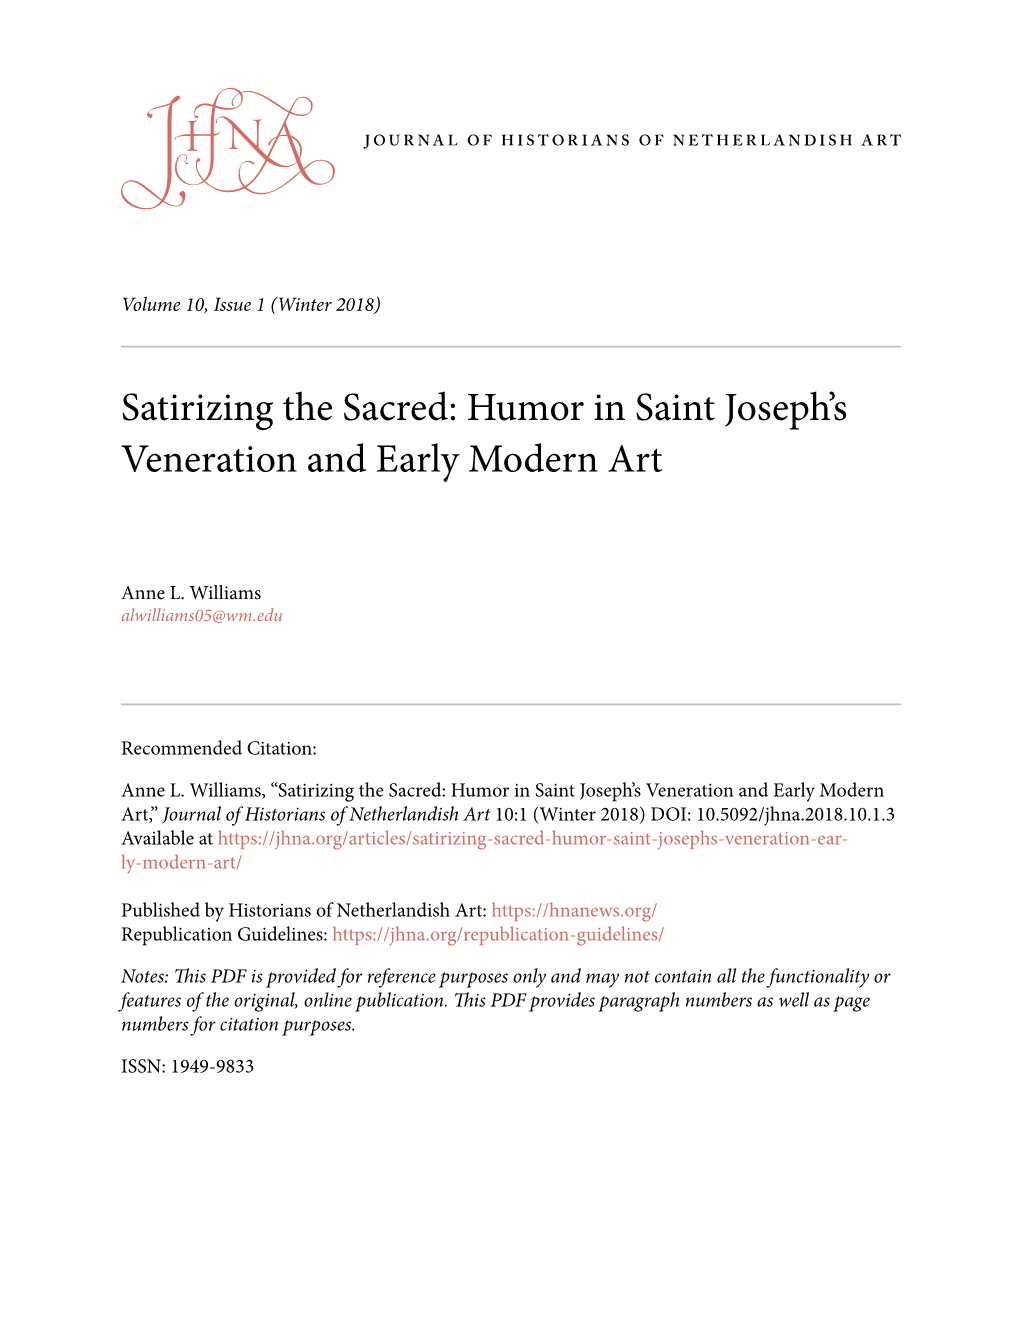 Humor in Saint Joseph's Veneration and Early Modern